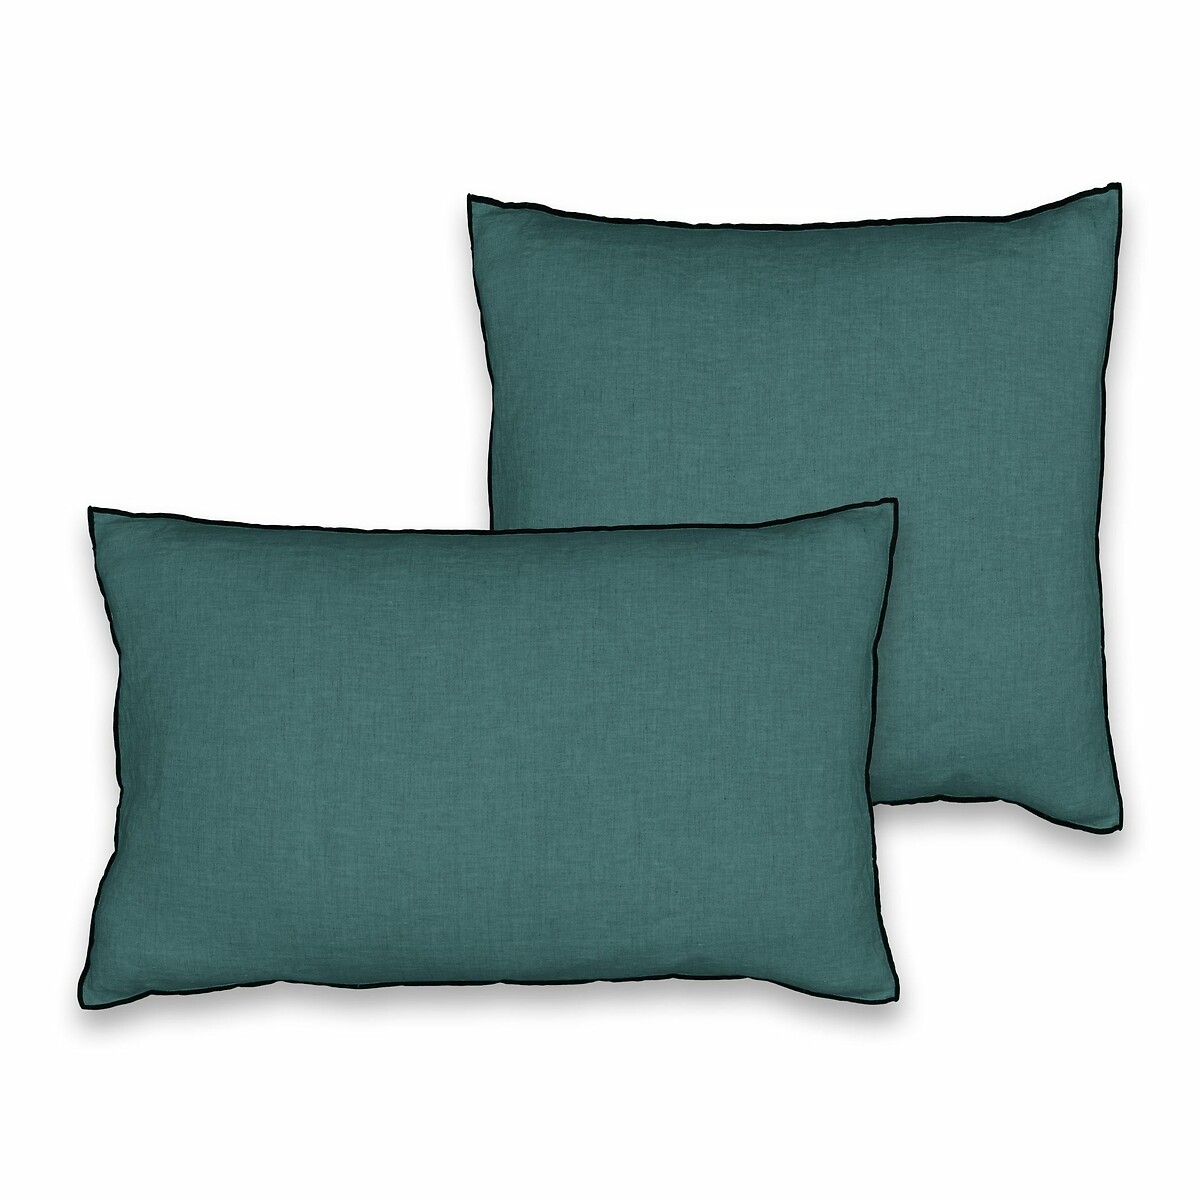 Чехол AM.PM На подушку 100 стираный лен ELina 50 x 50 см зеленый, размер 50 x 50 см - фото 1